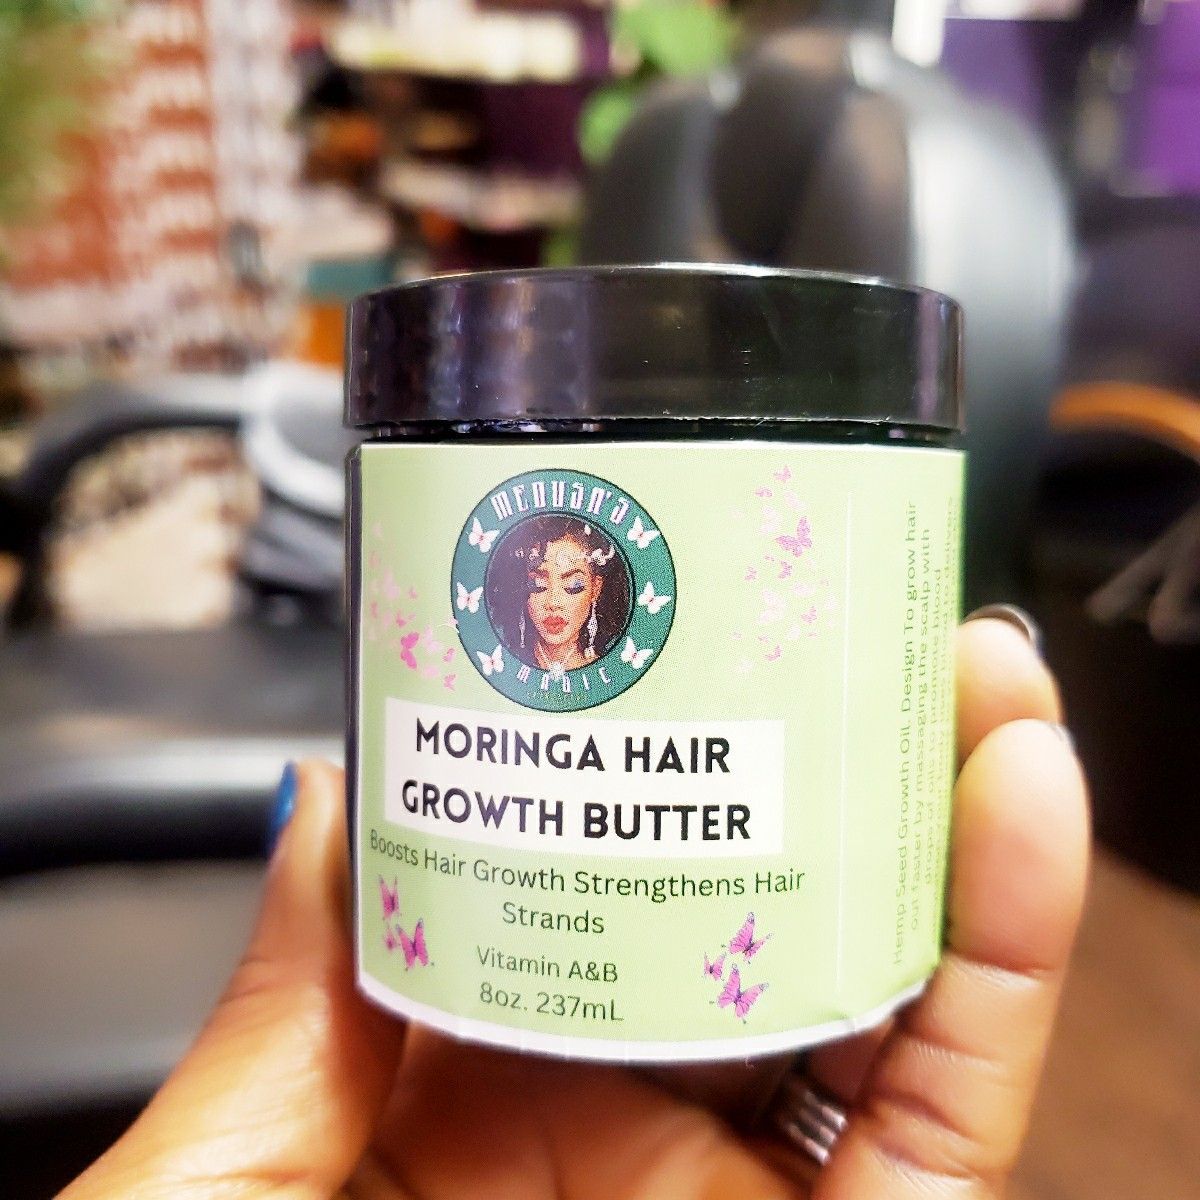 Moringa Hair Growth Butter portfolio